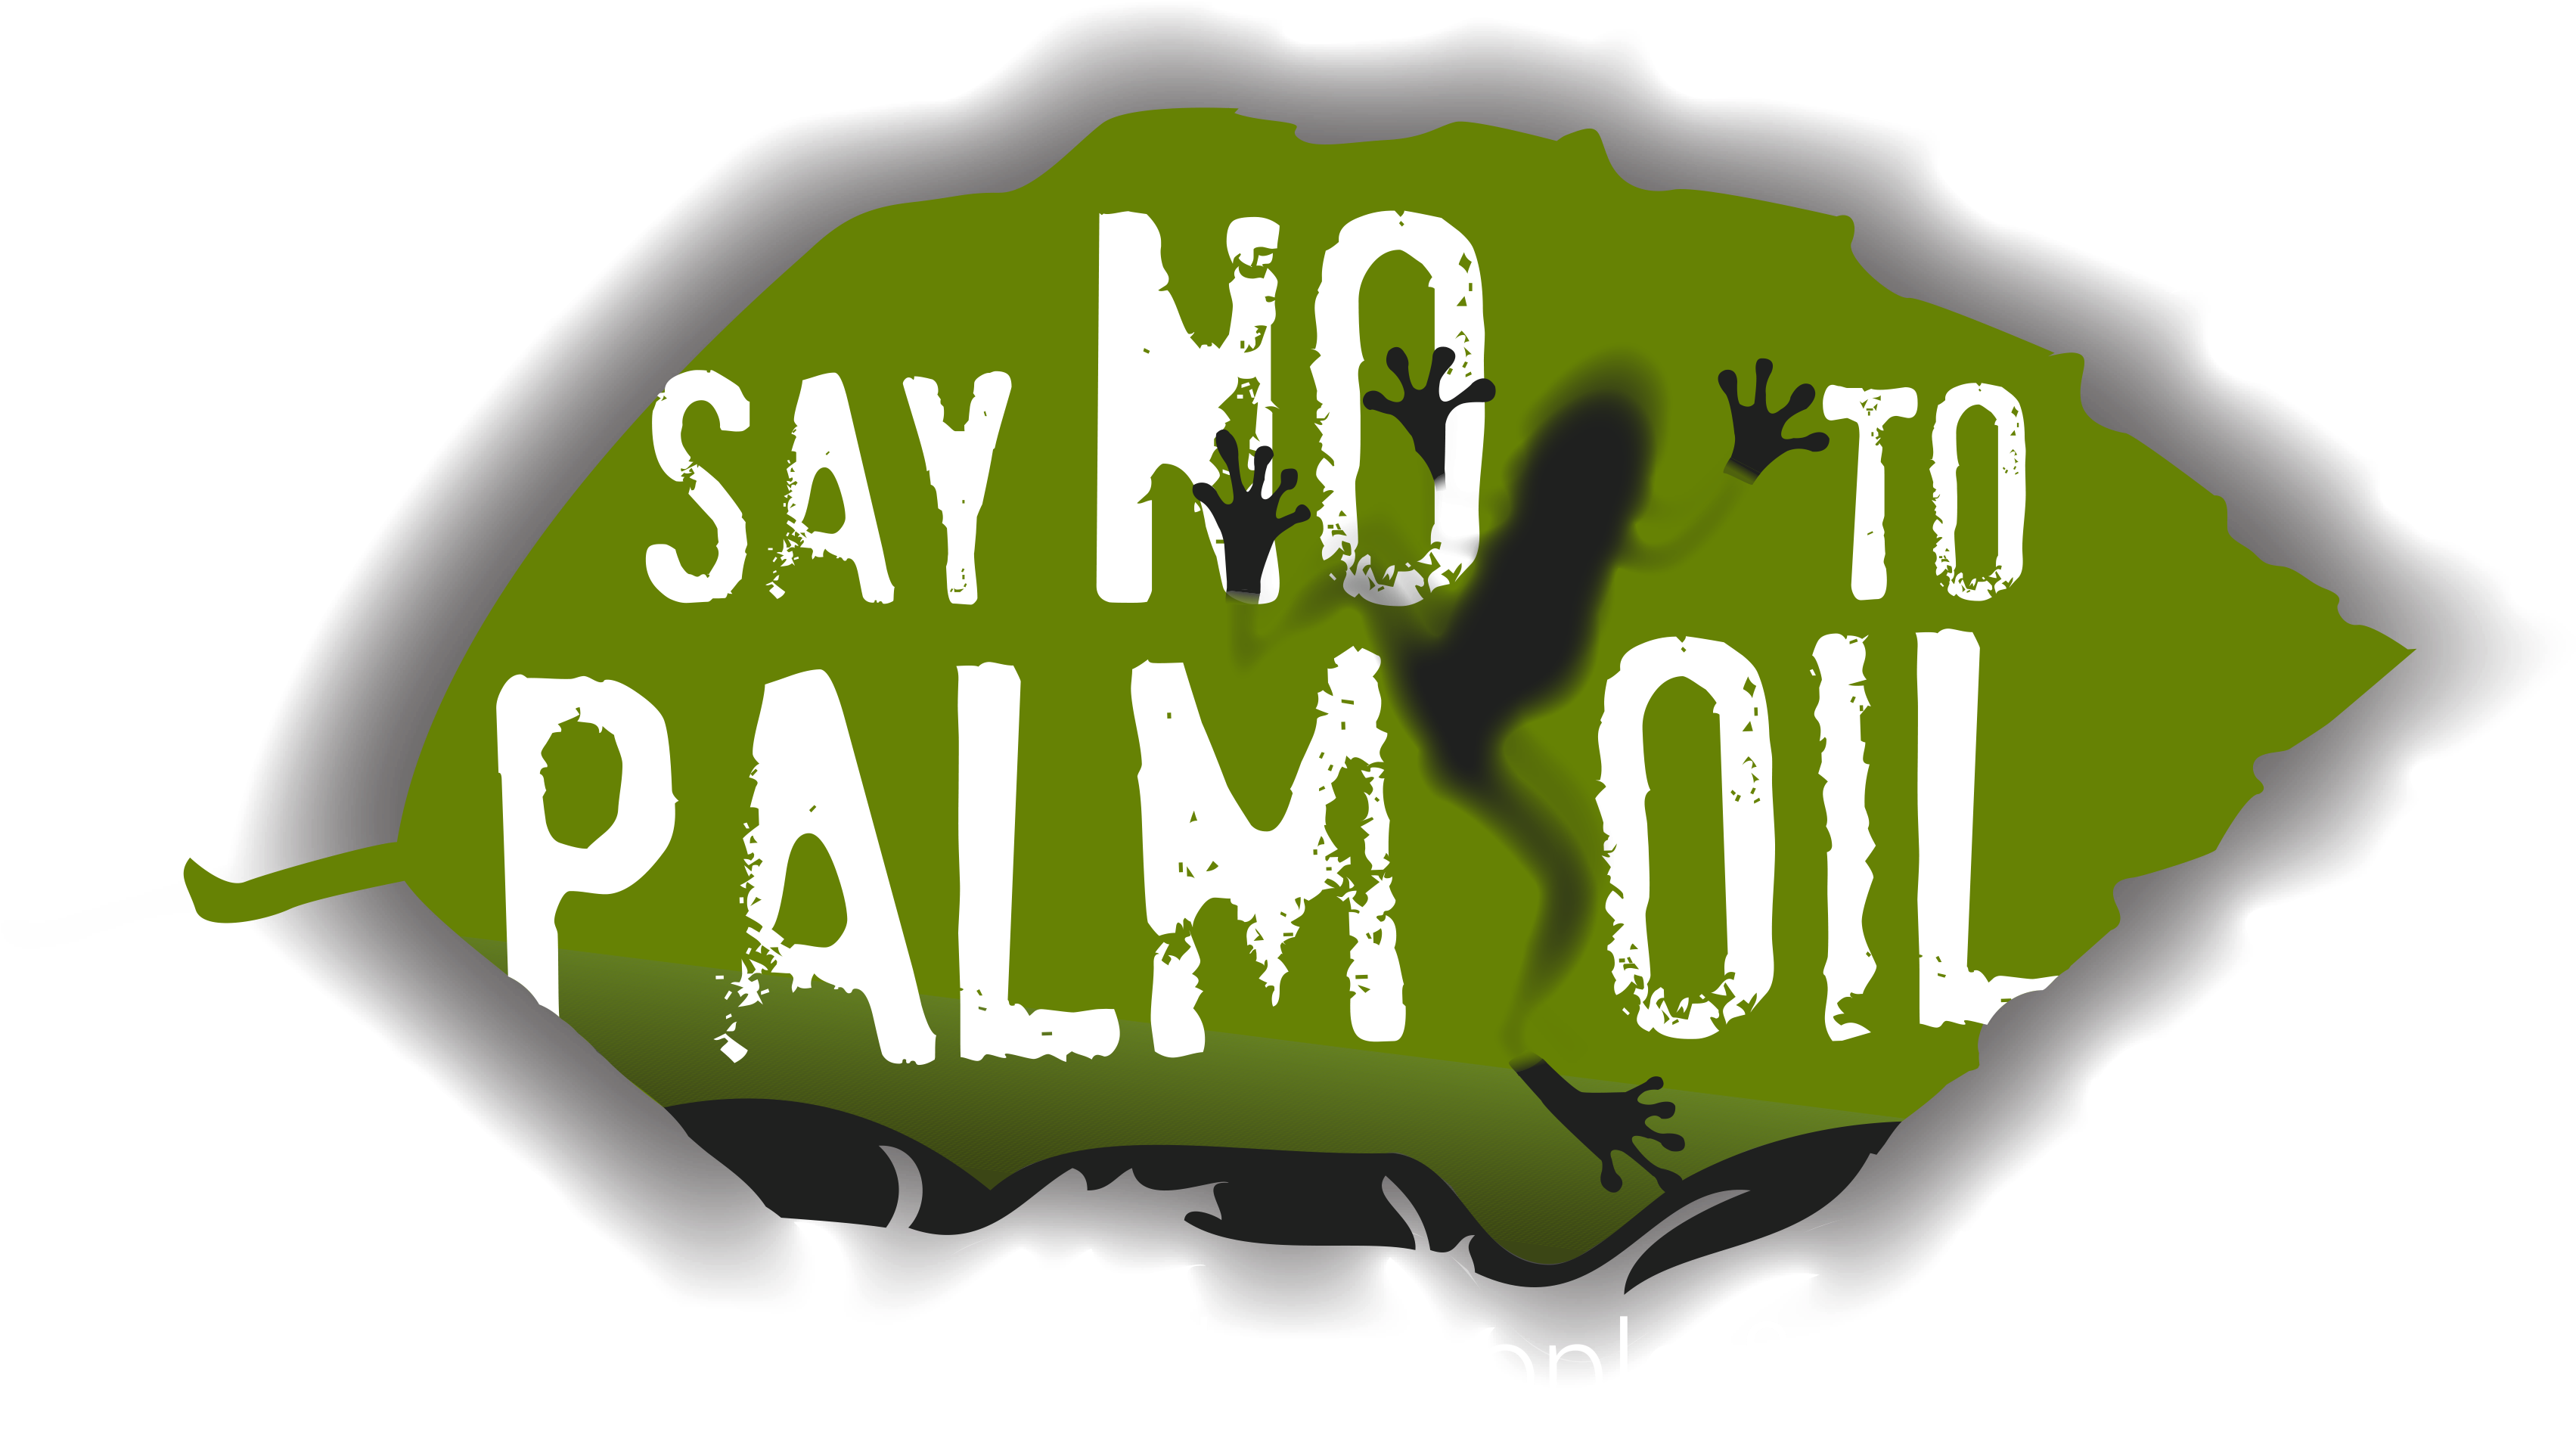 Through The Lens - Do Not Use Palm Oil (3474x1930)